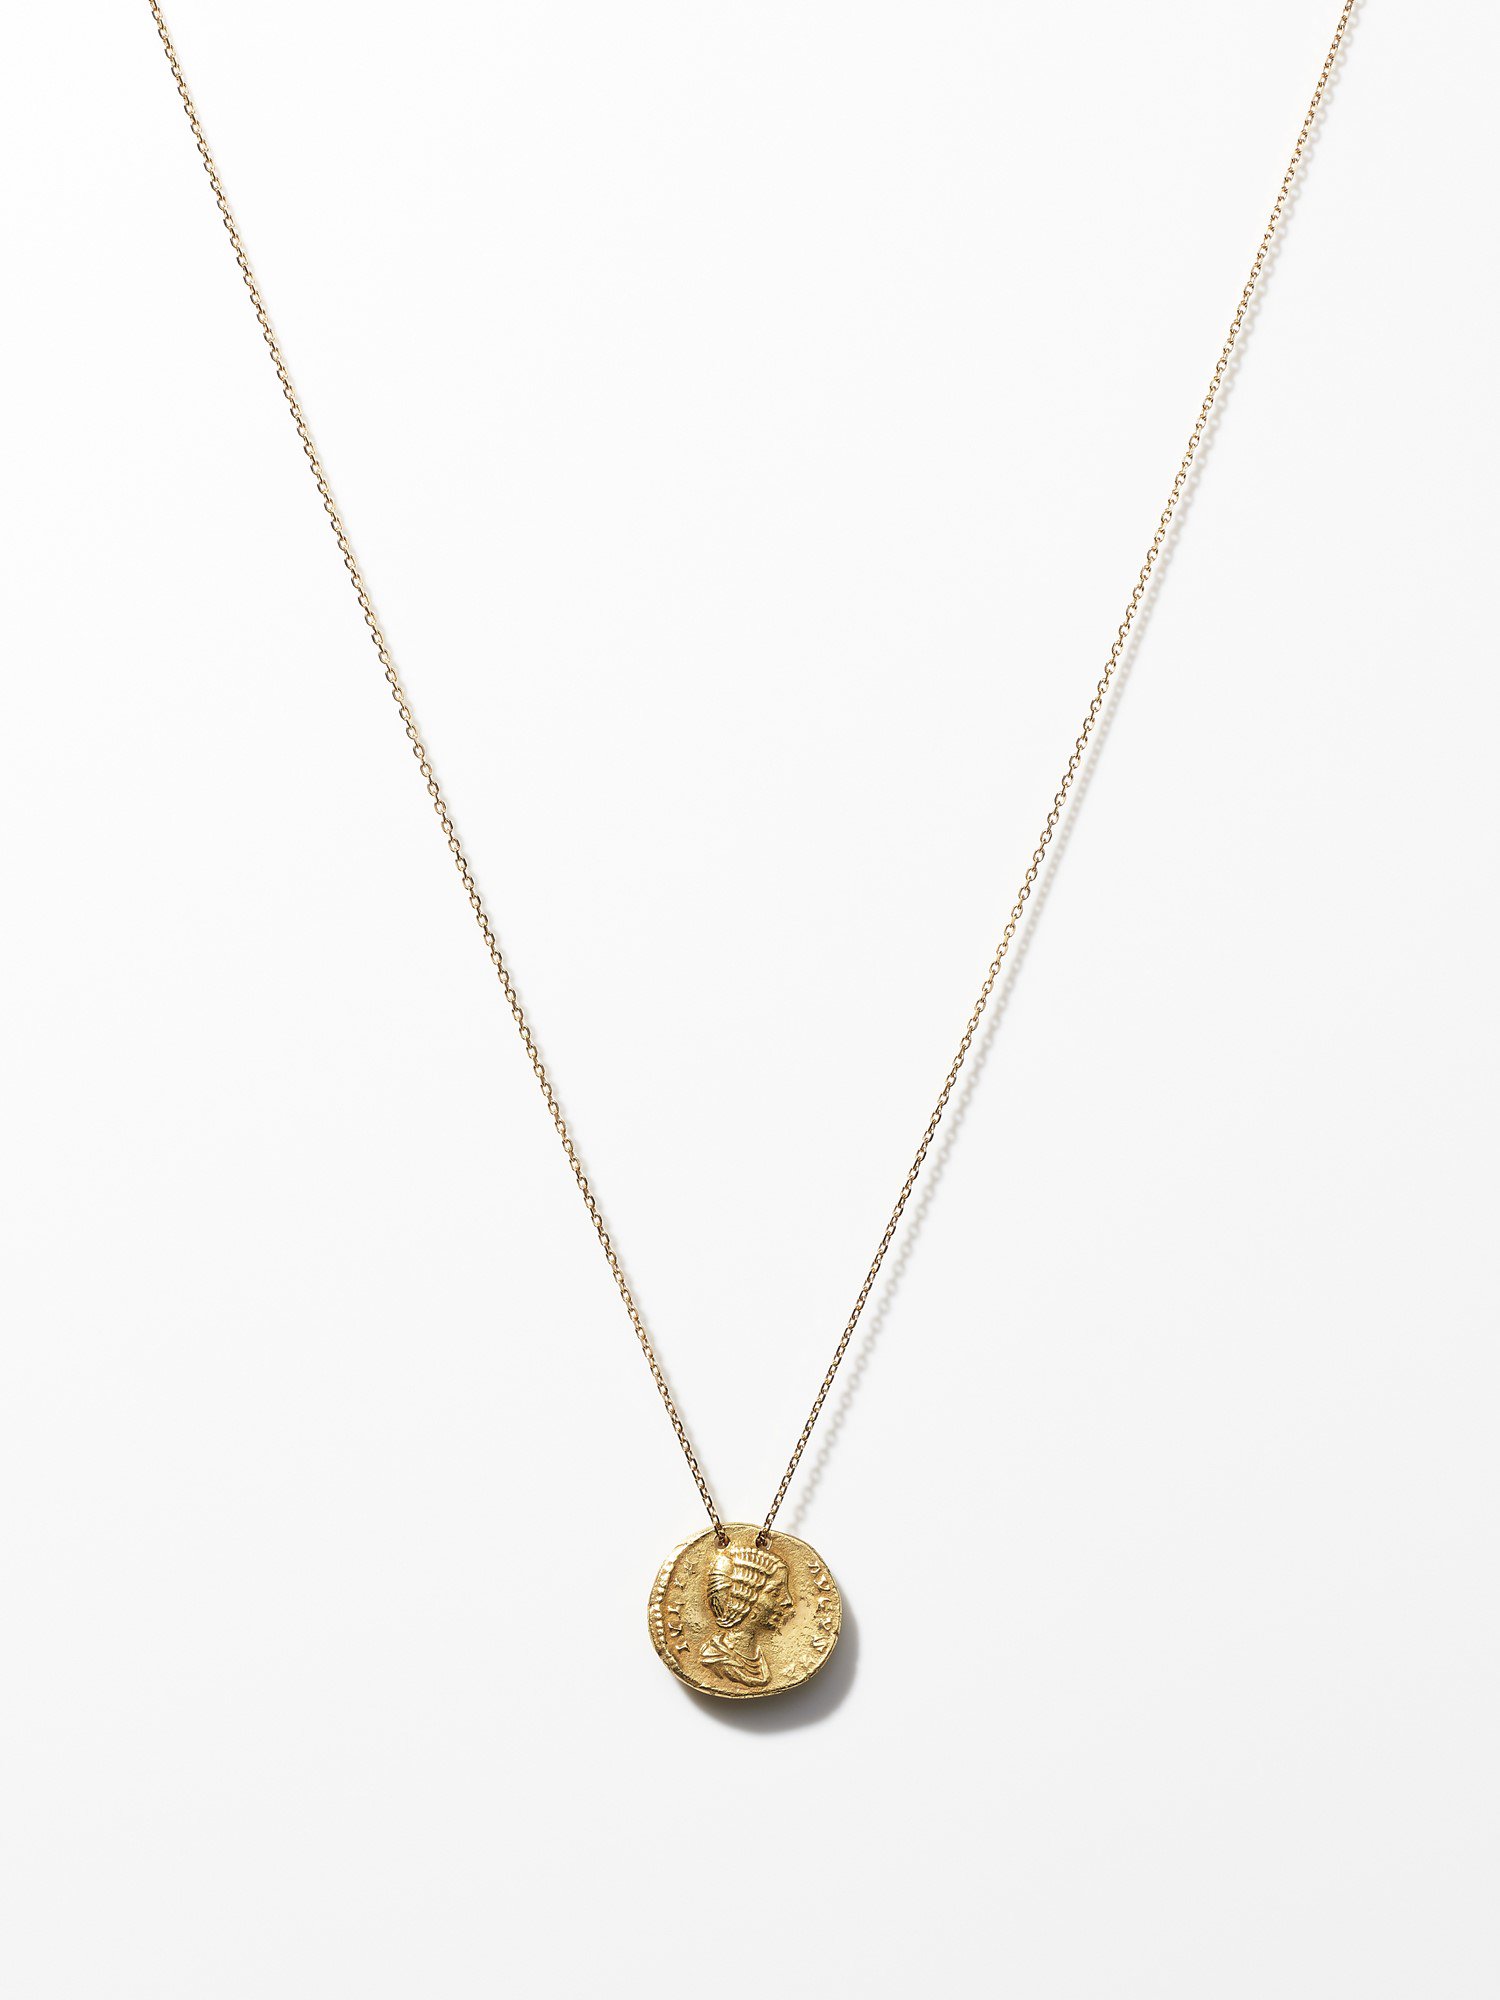 HELIOS / Roman coin necklace / JULIA - GIGI Jewelry